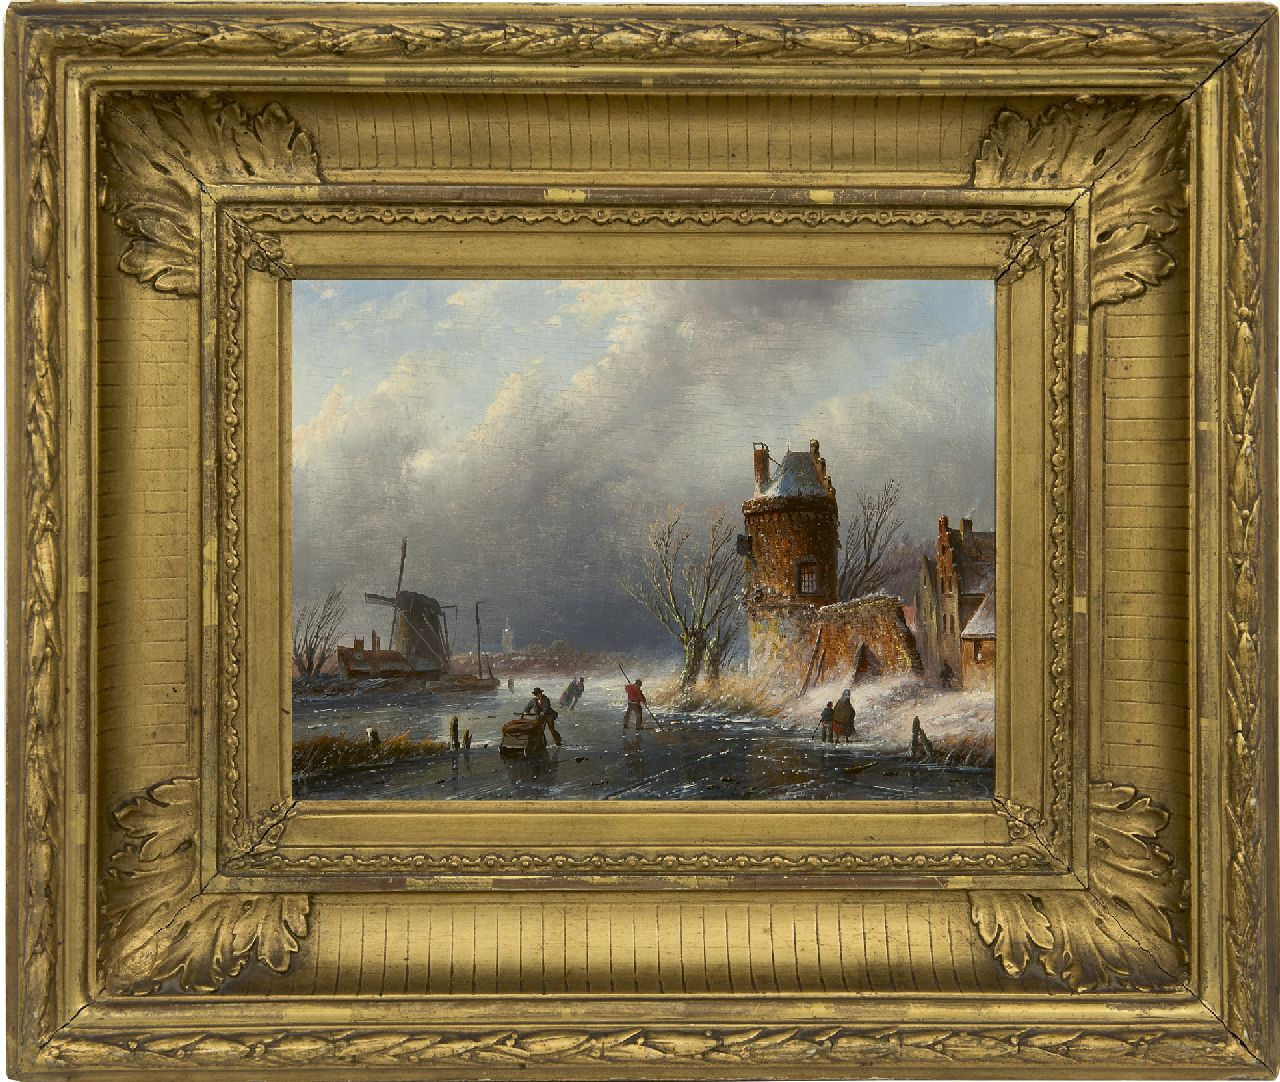 Spohler J.J.C.  | Jacob Jan Coenraad Spohler, A winter landscape with skaters, oil on panel 15.6 x 21.1 cm, signed l.r. with initials